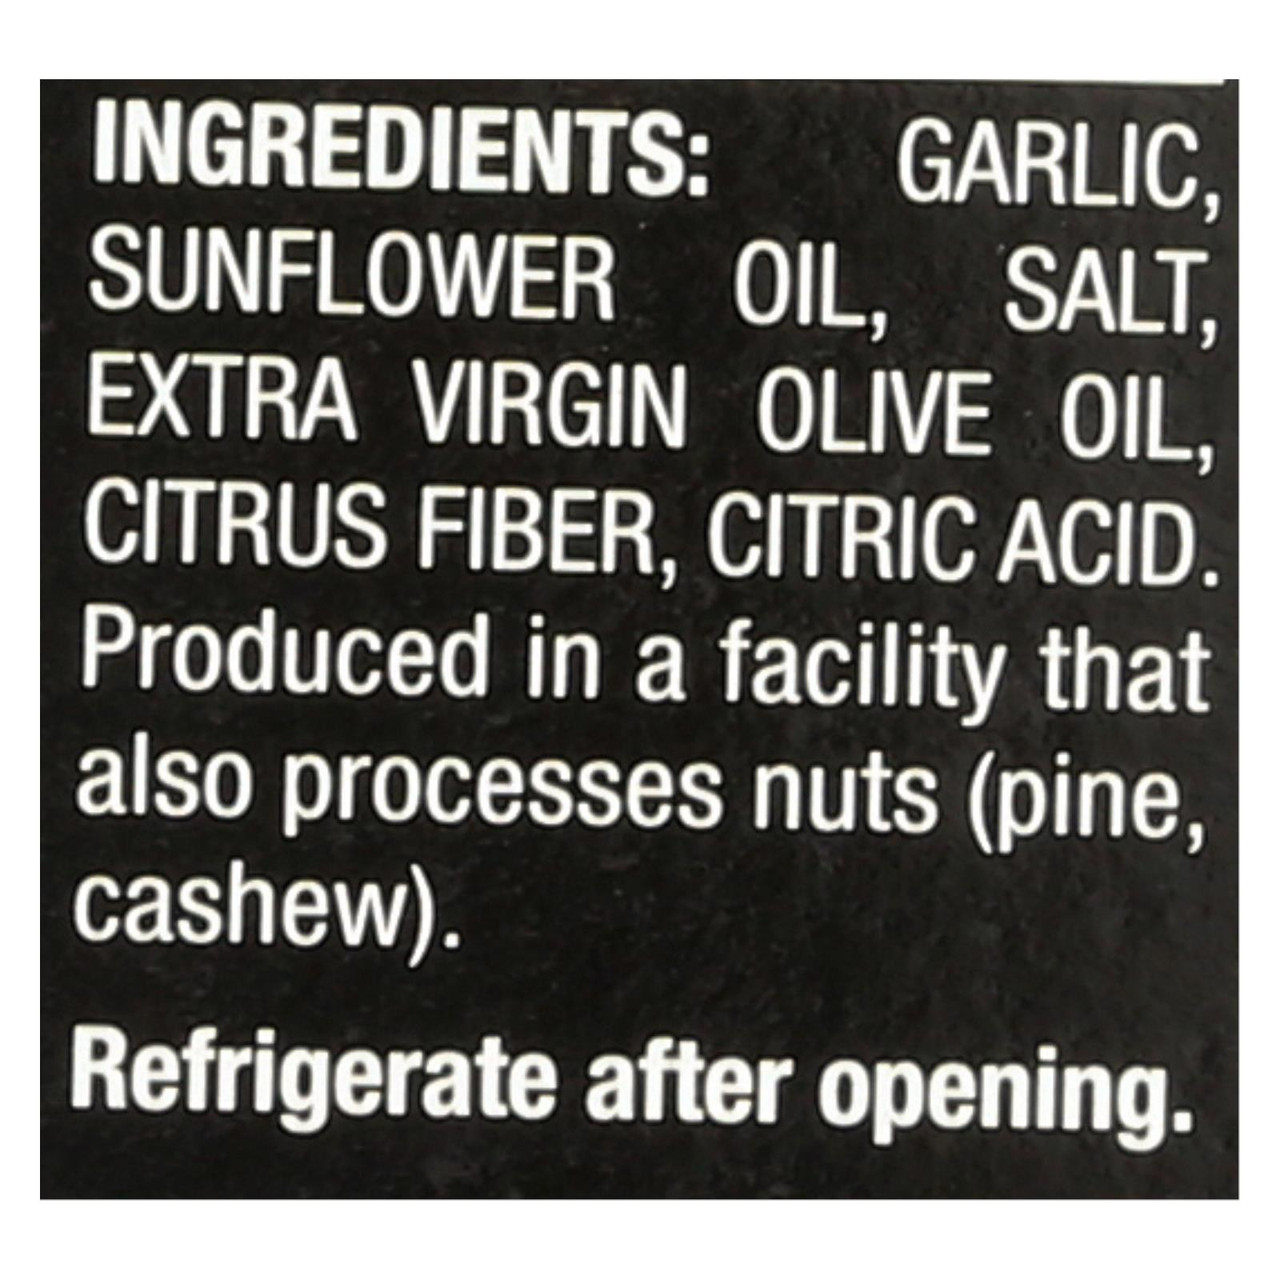  Amore Vegan Garlic Paste In A Tube - Non GMO